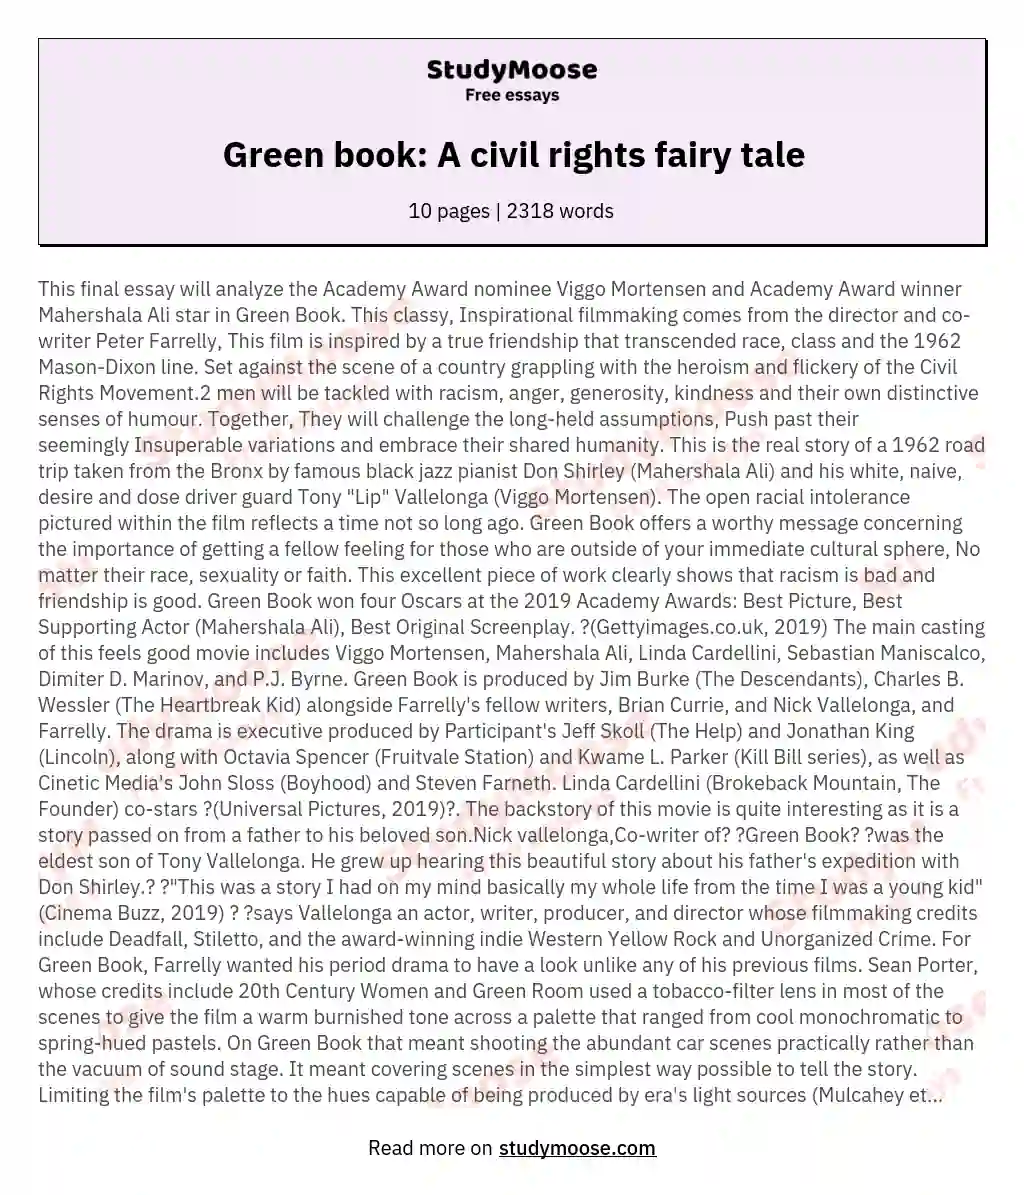 Green book: A civil rights fairy tale essay